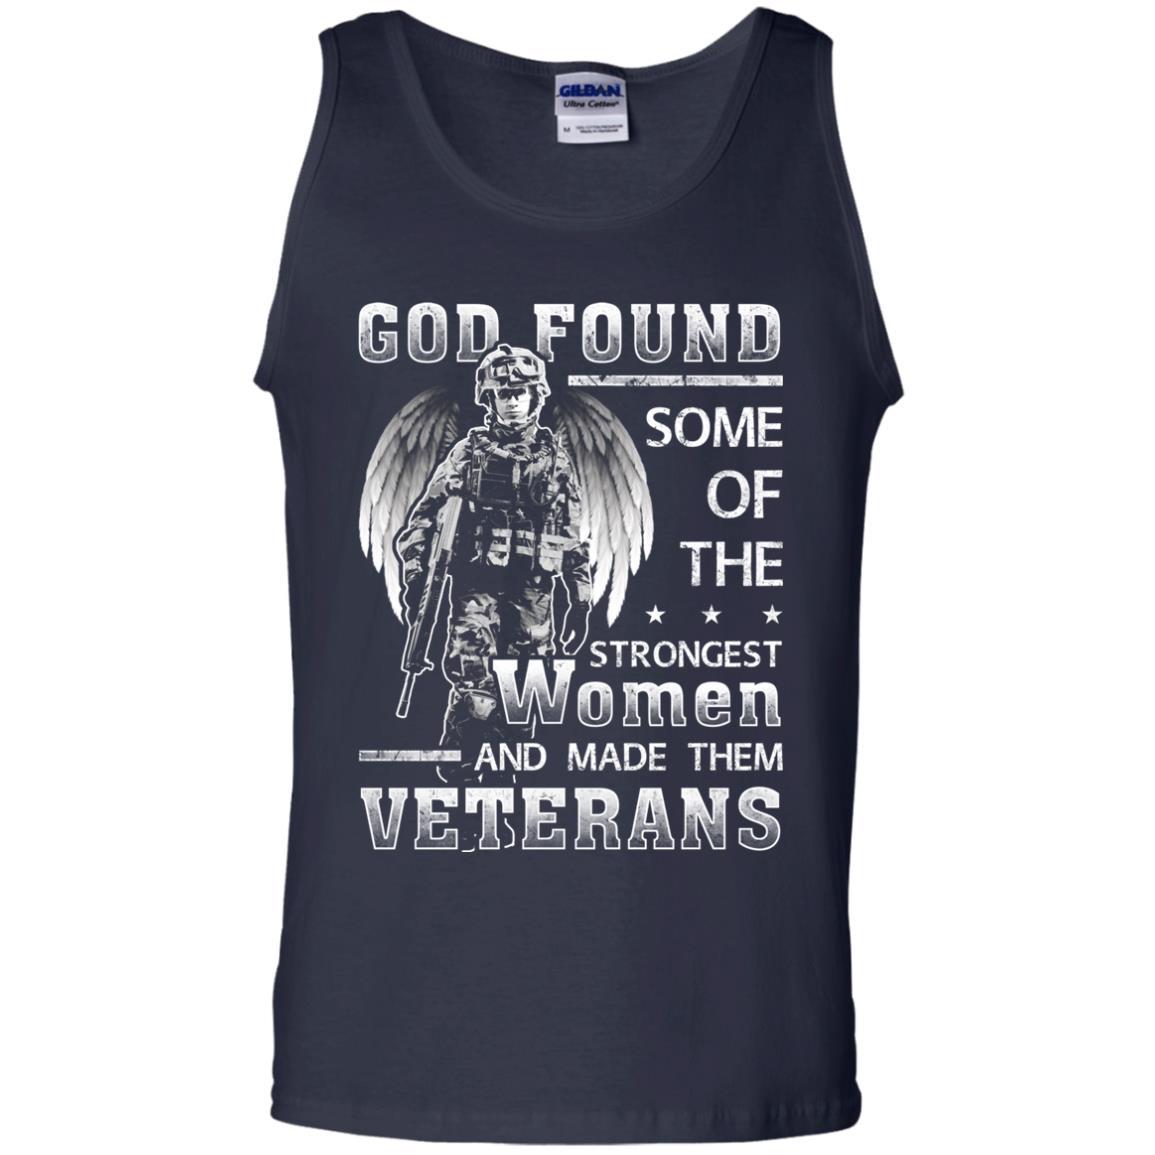 Military T-Shirt "Female Veterans God Found The Strongest Women And Made Them Veterans Women On" Front-TShirt-General-Veterans Nation